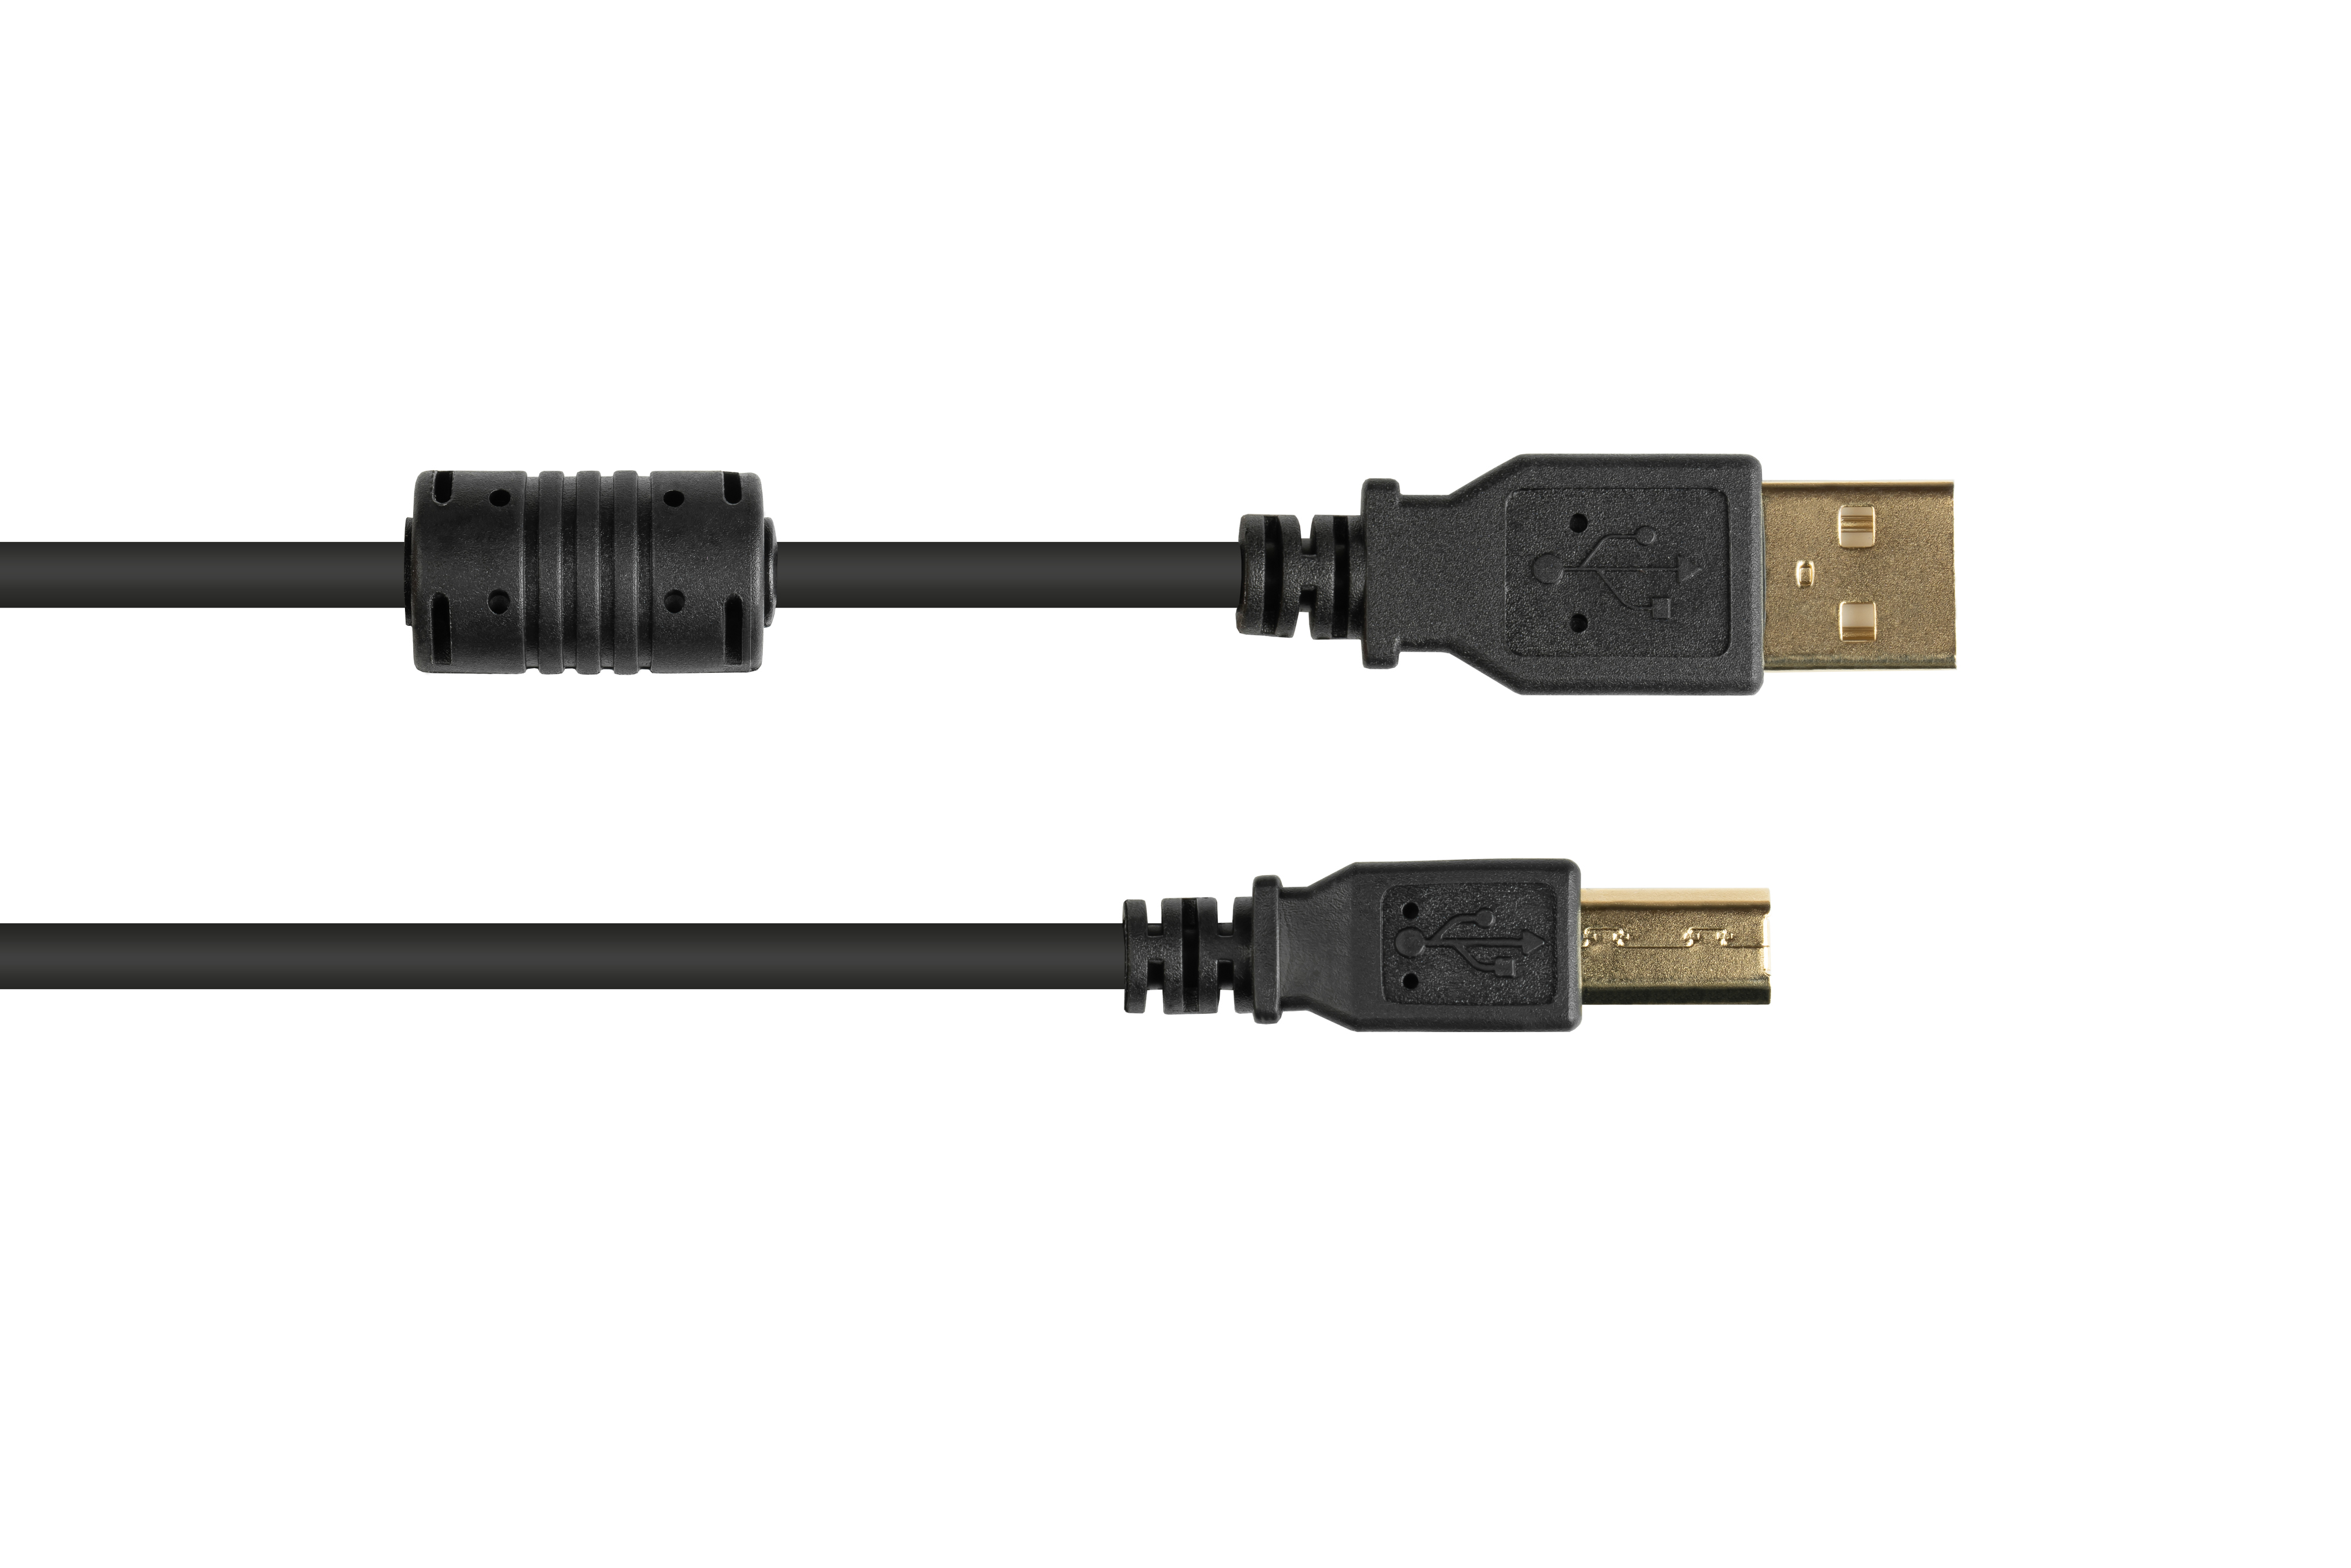 GOOD CONNECTIONS USB 2.0 mit Stecker A schwarz B, Ferritkern, an vergoldet, Anschlusskabel Stecker